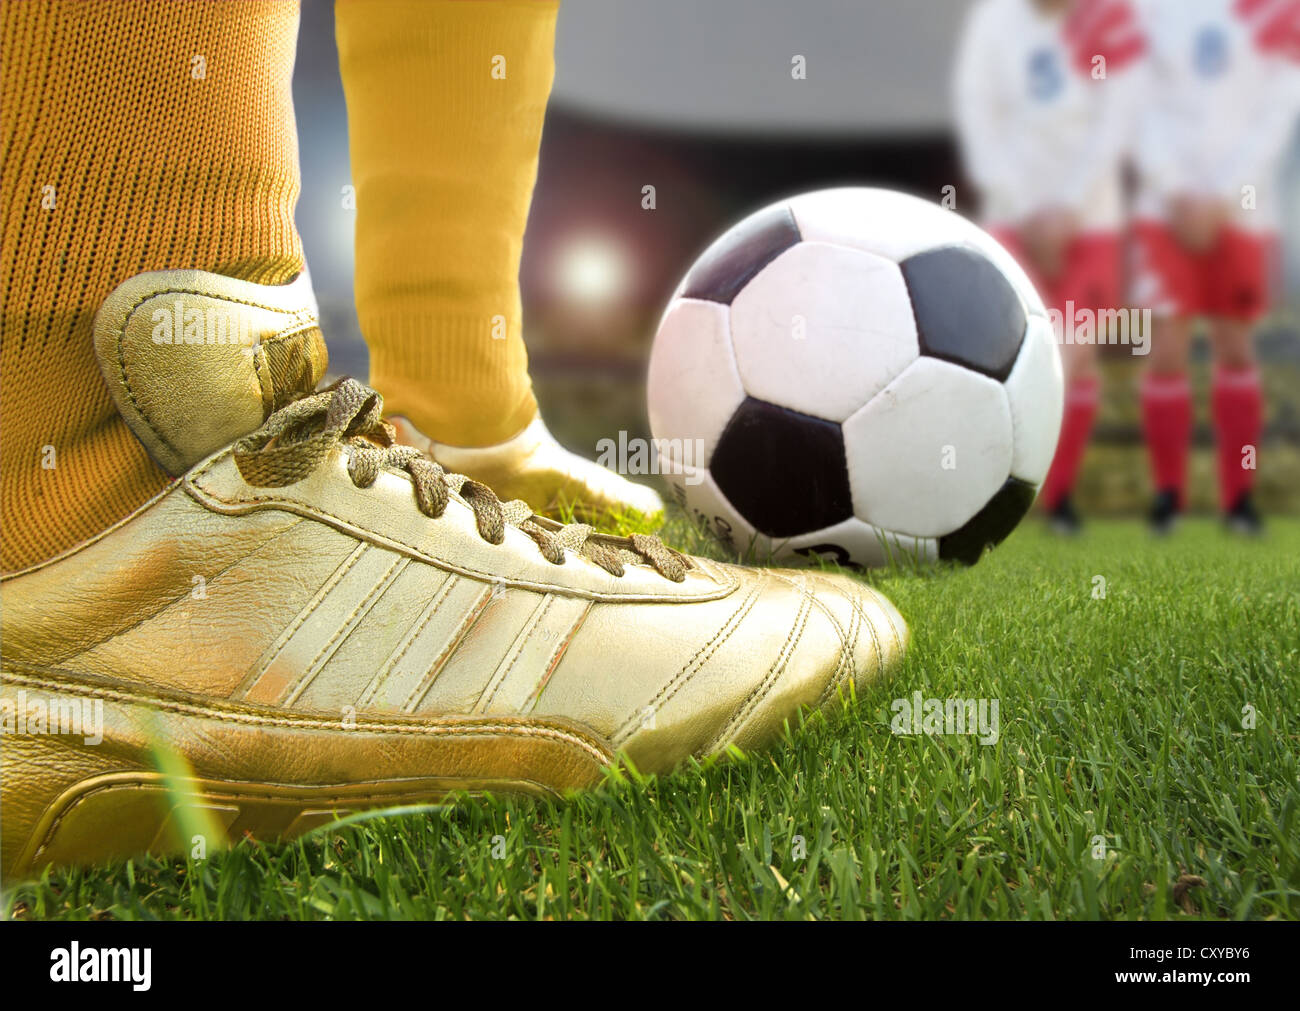 Football player, detail, wearing golden football boots Stock Photo